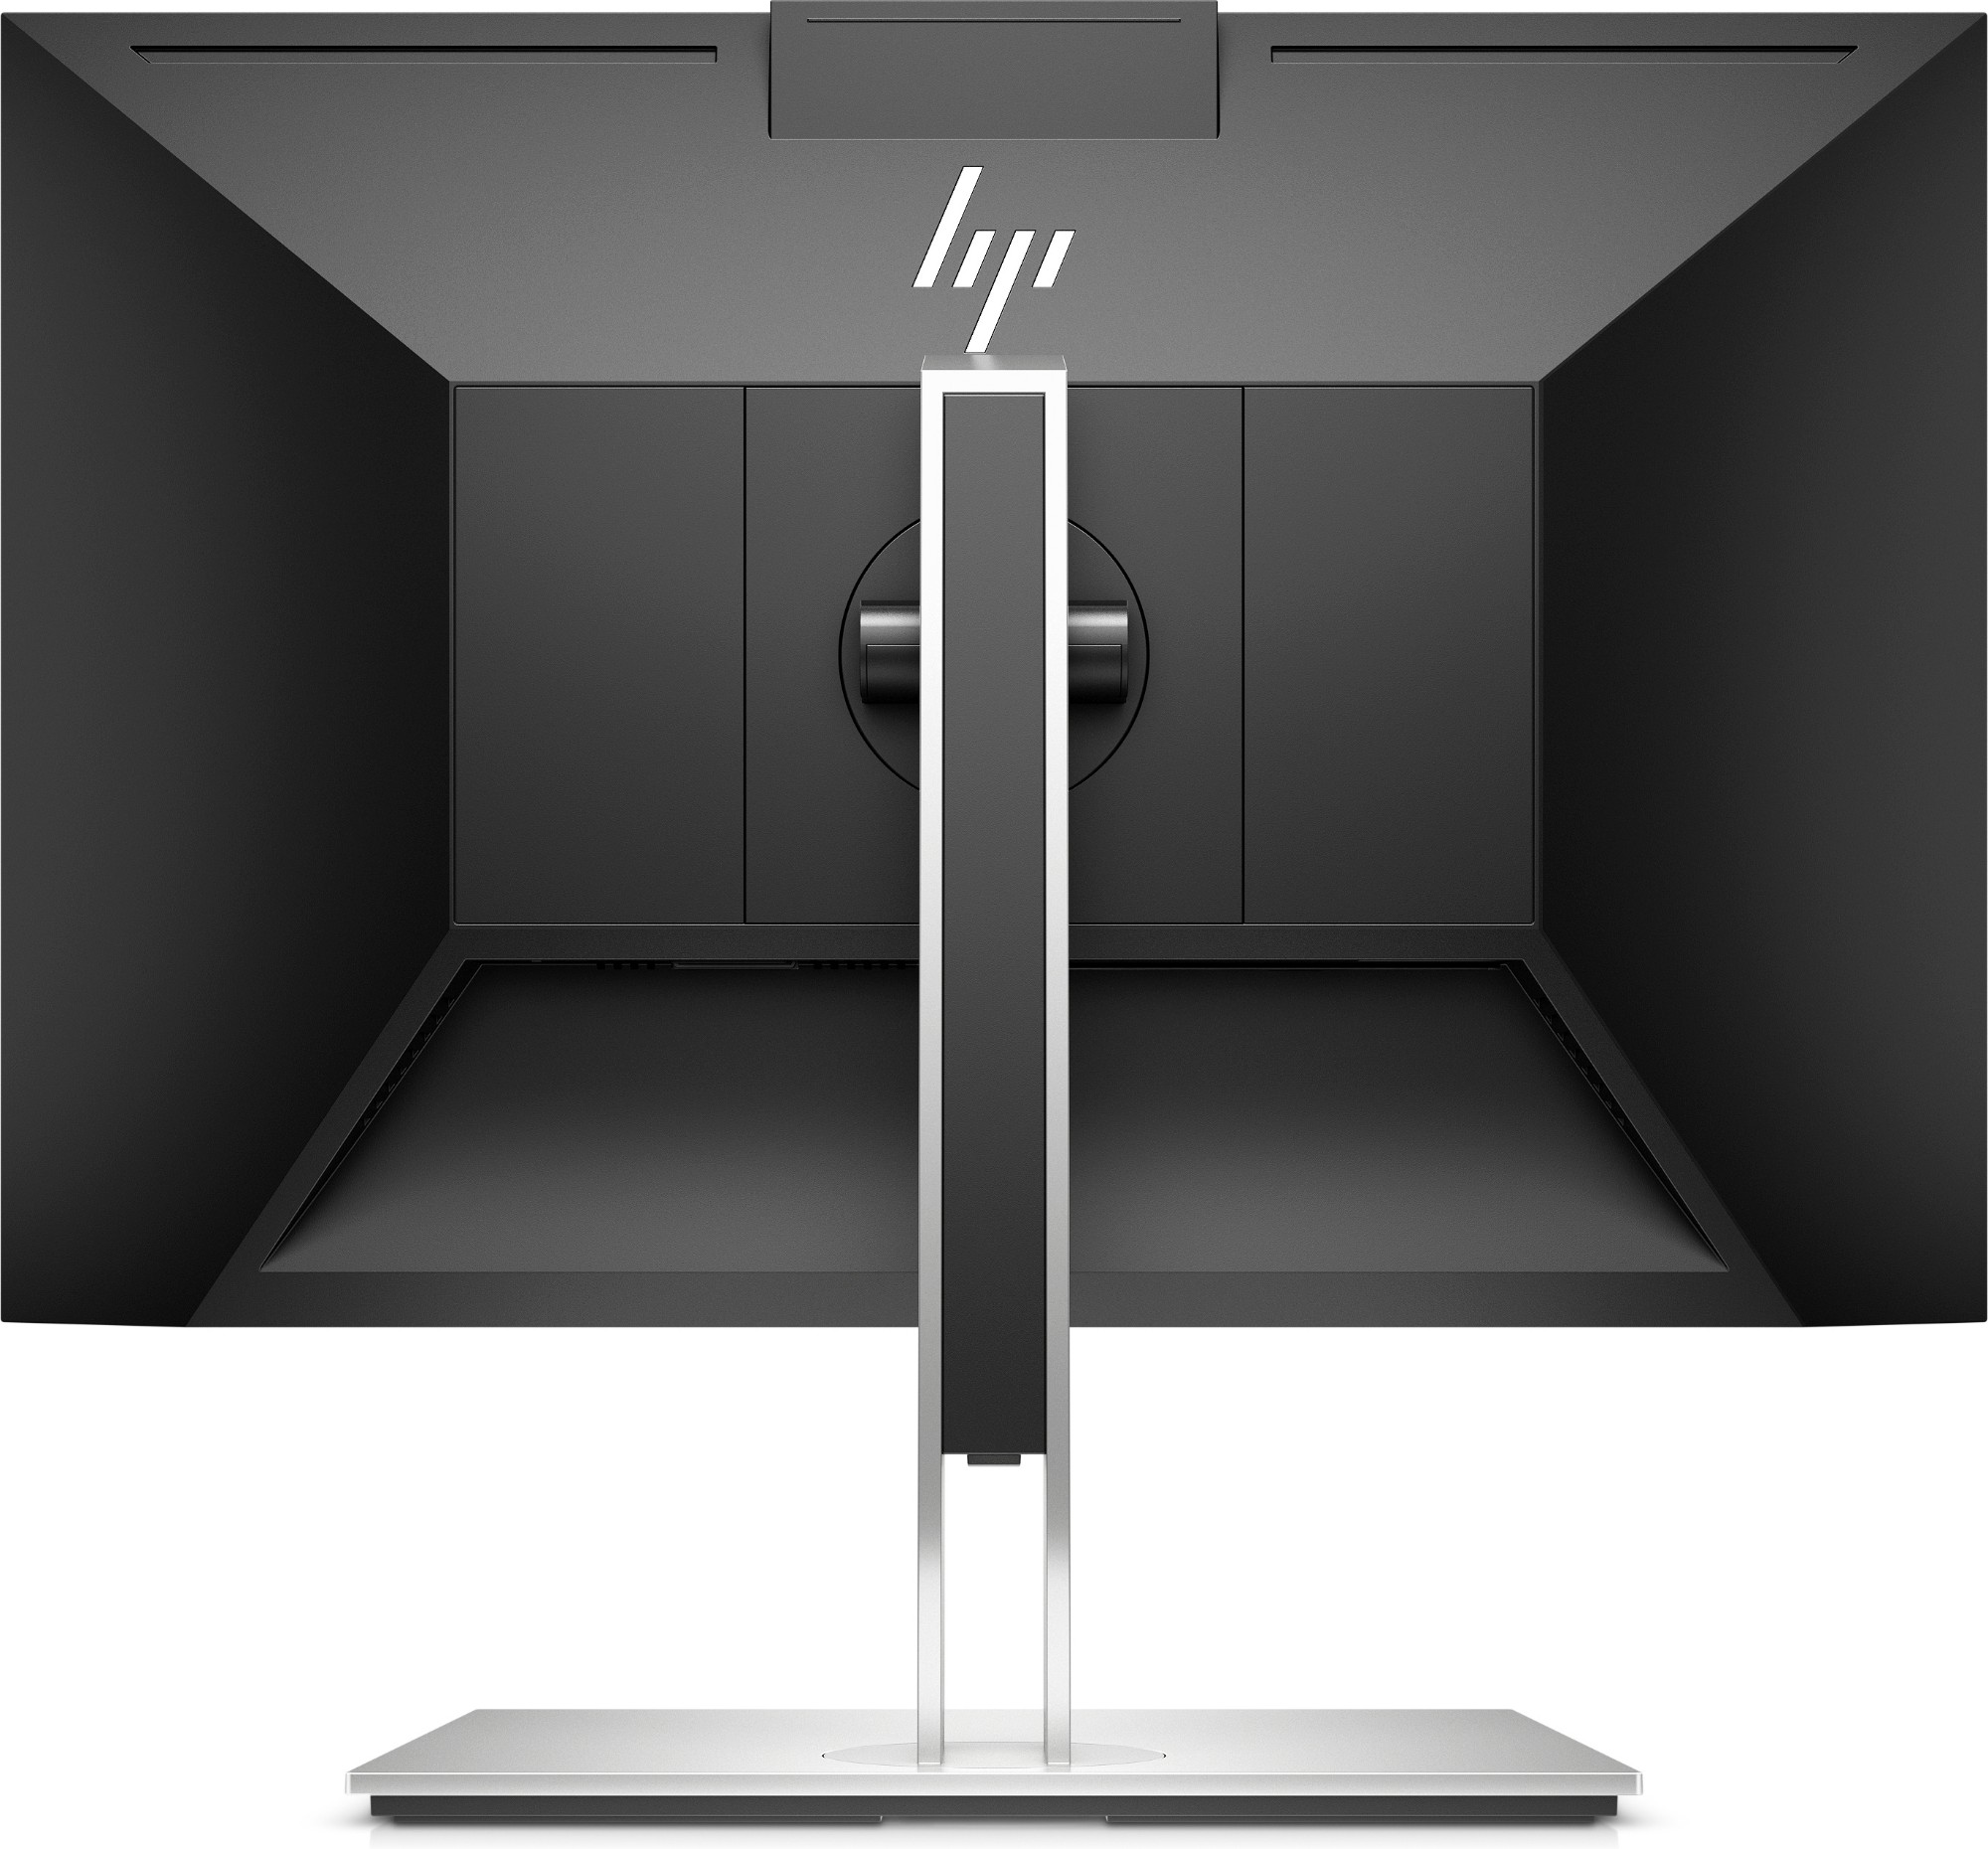 HP E24m G4 computer monitor 60.5 cm (23.8") 1920 x 1080 pixels Full HD LCD Black, Silver